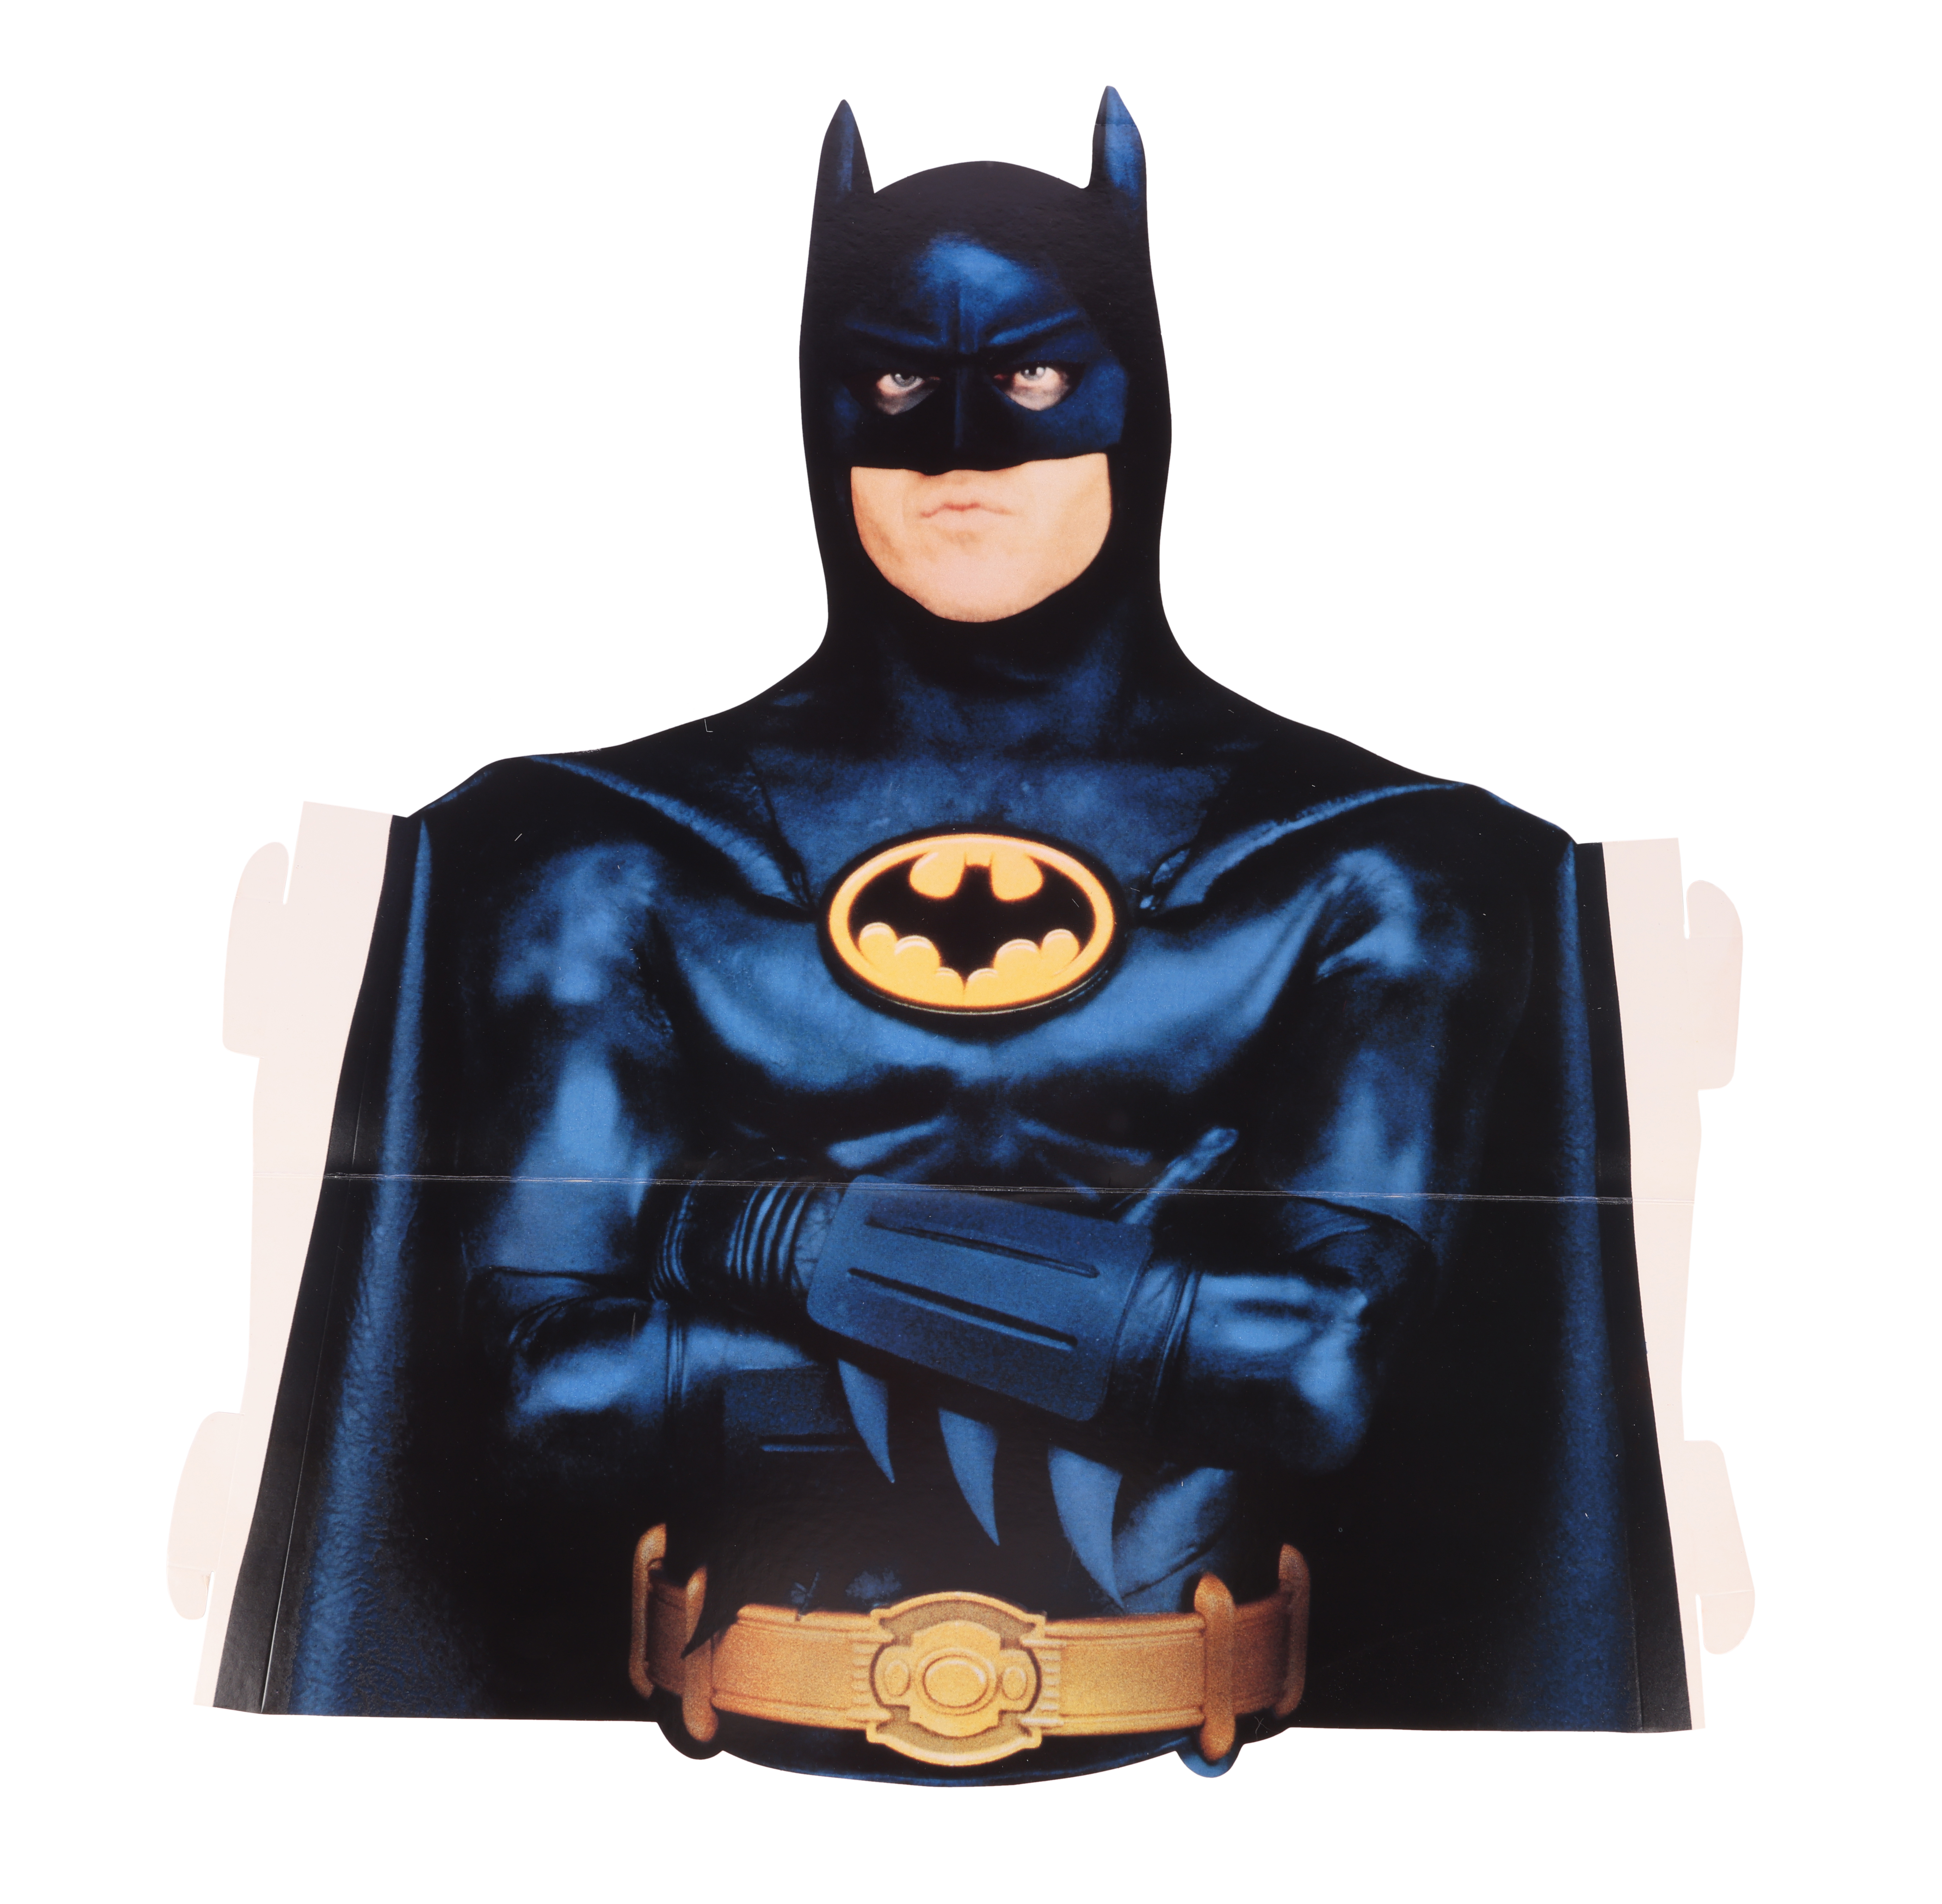 BATMAN (1989) - Batman Promotional Cinema Standee, 1989 - Image 2 of 6